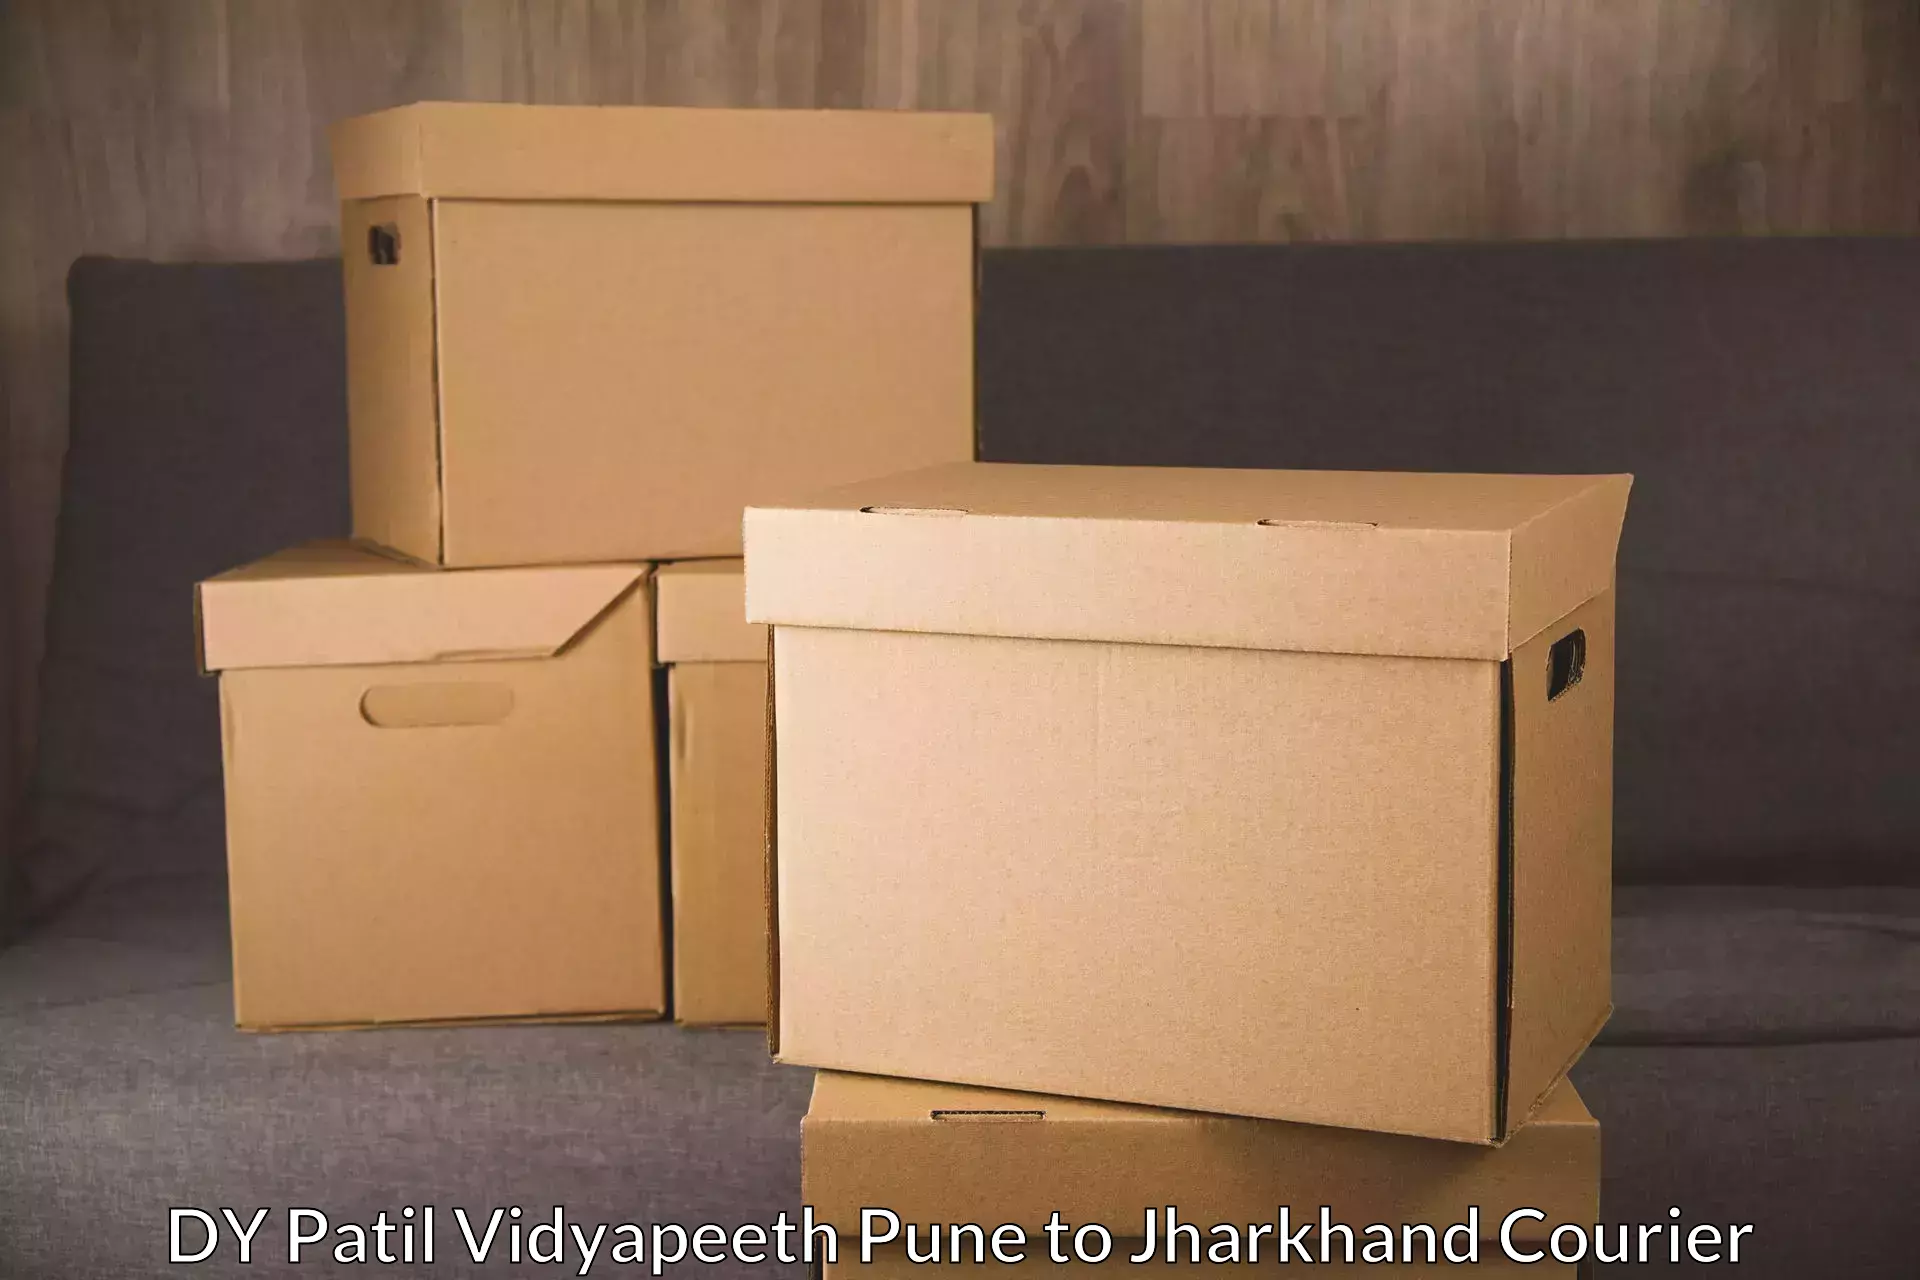 24/7 courier service DY Patil Vidyapeeth Pune to Khalari Ranchi